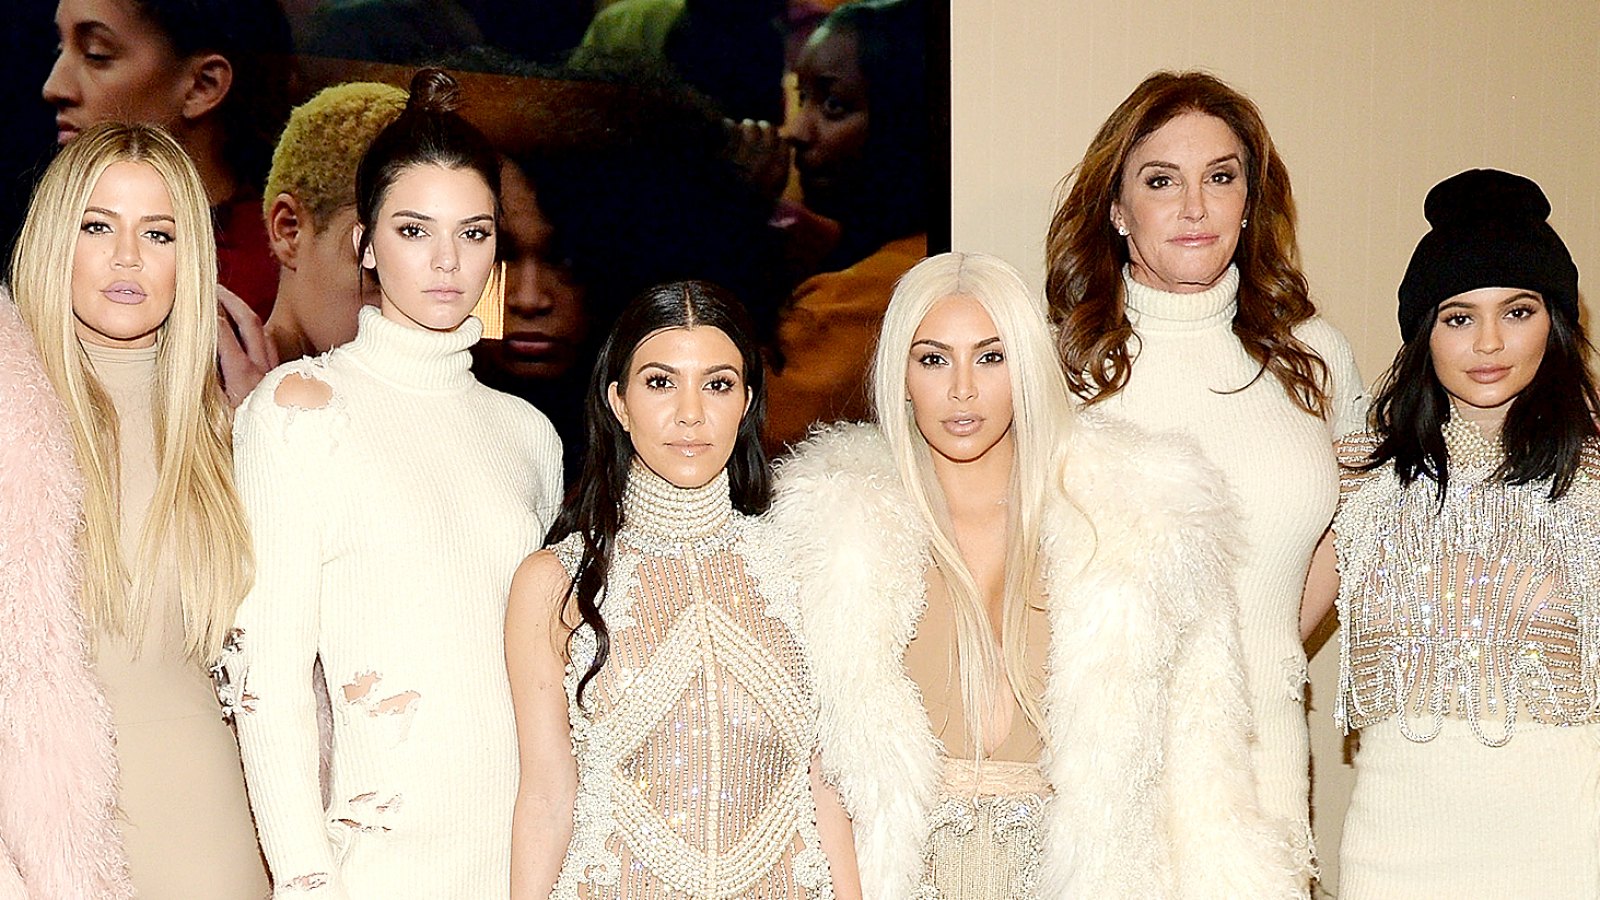 Khloe Kardashian, Kris Jenner, Kendall Jenner, Kourtney Kardashian, Kim Kardashian West, Caitlyn Jenner and Kylie Jenner attend Kanye West Yeezy Season 3 at Madison Square Garden on February 11, 2016 in New York City.